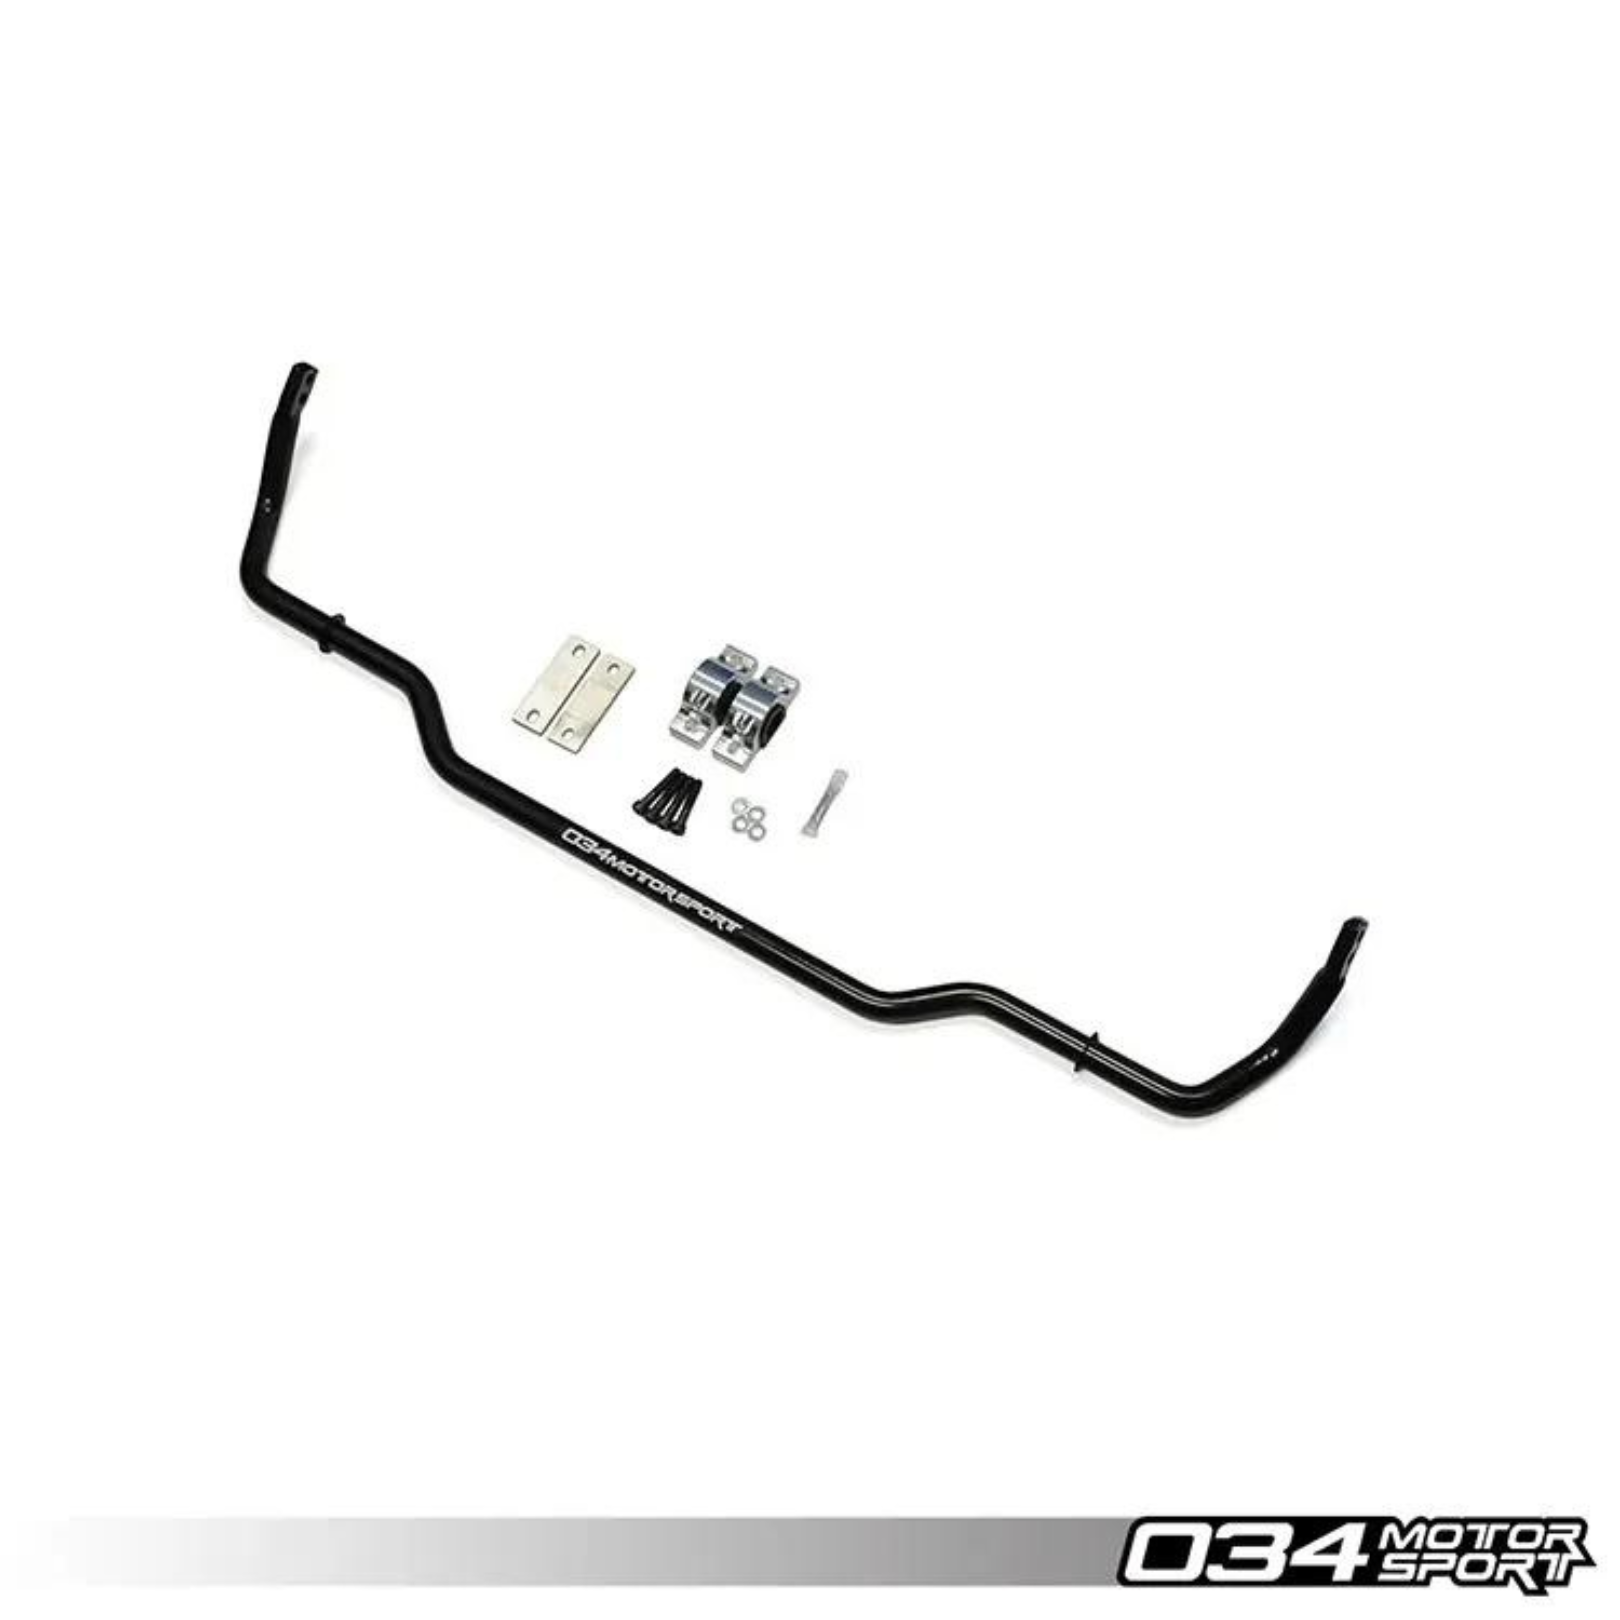 034 Motorsport - Adjustable Solid Rear Sway Bar - VW MK5 & 6 Golf GTI - 034-402-1003